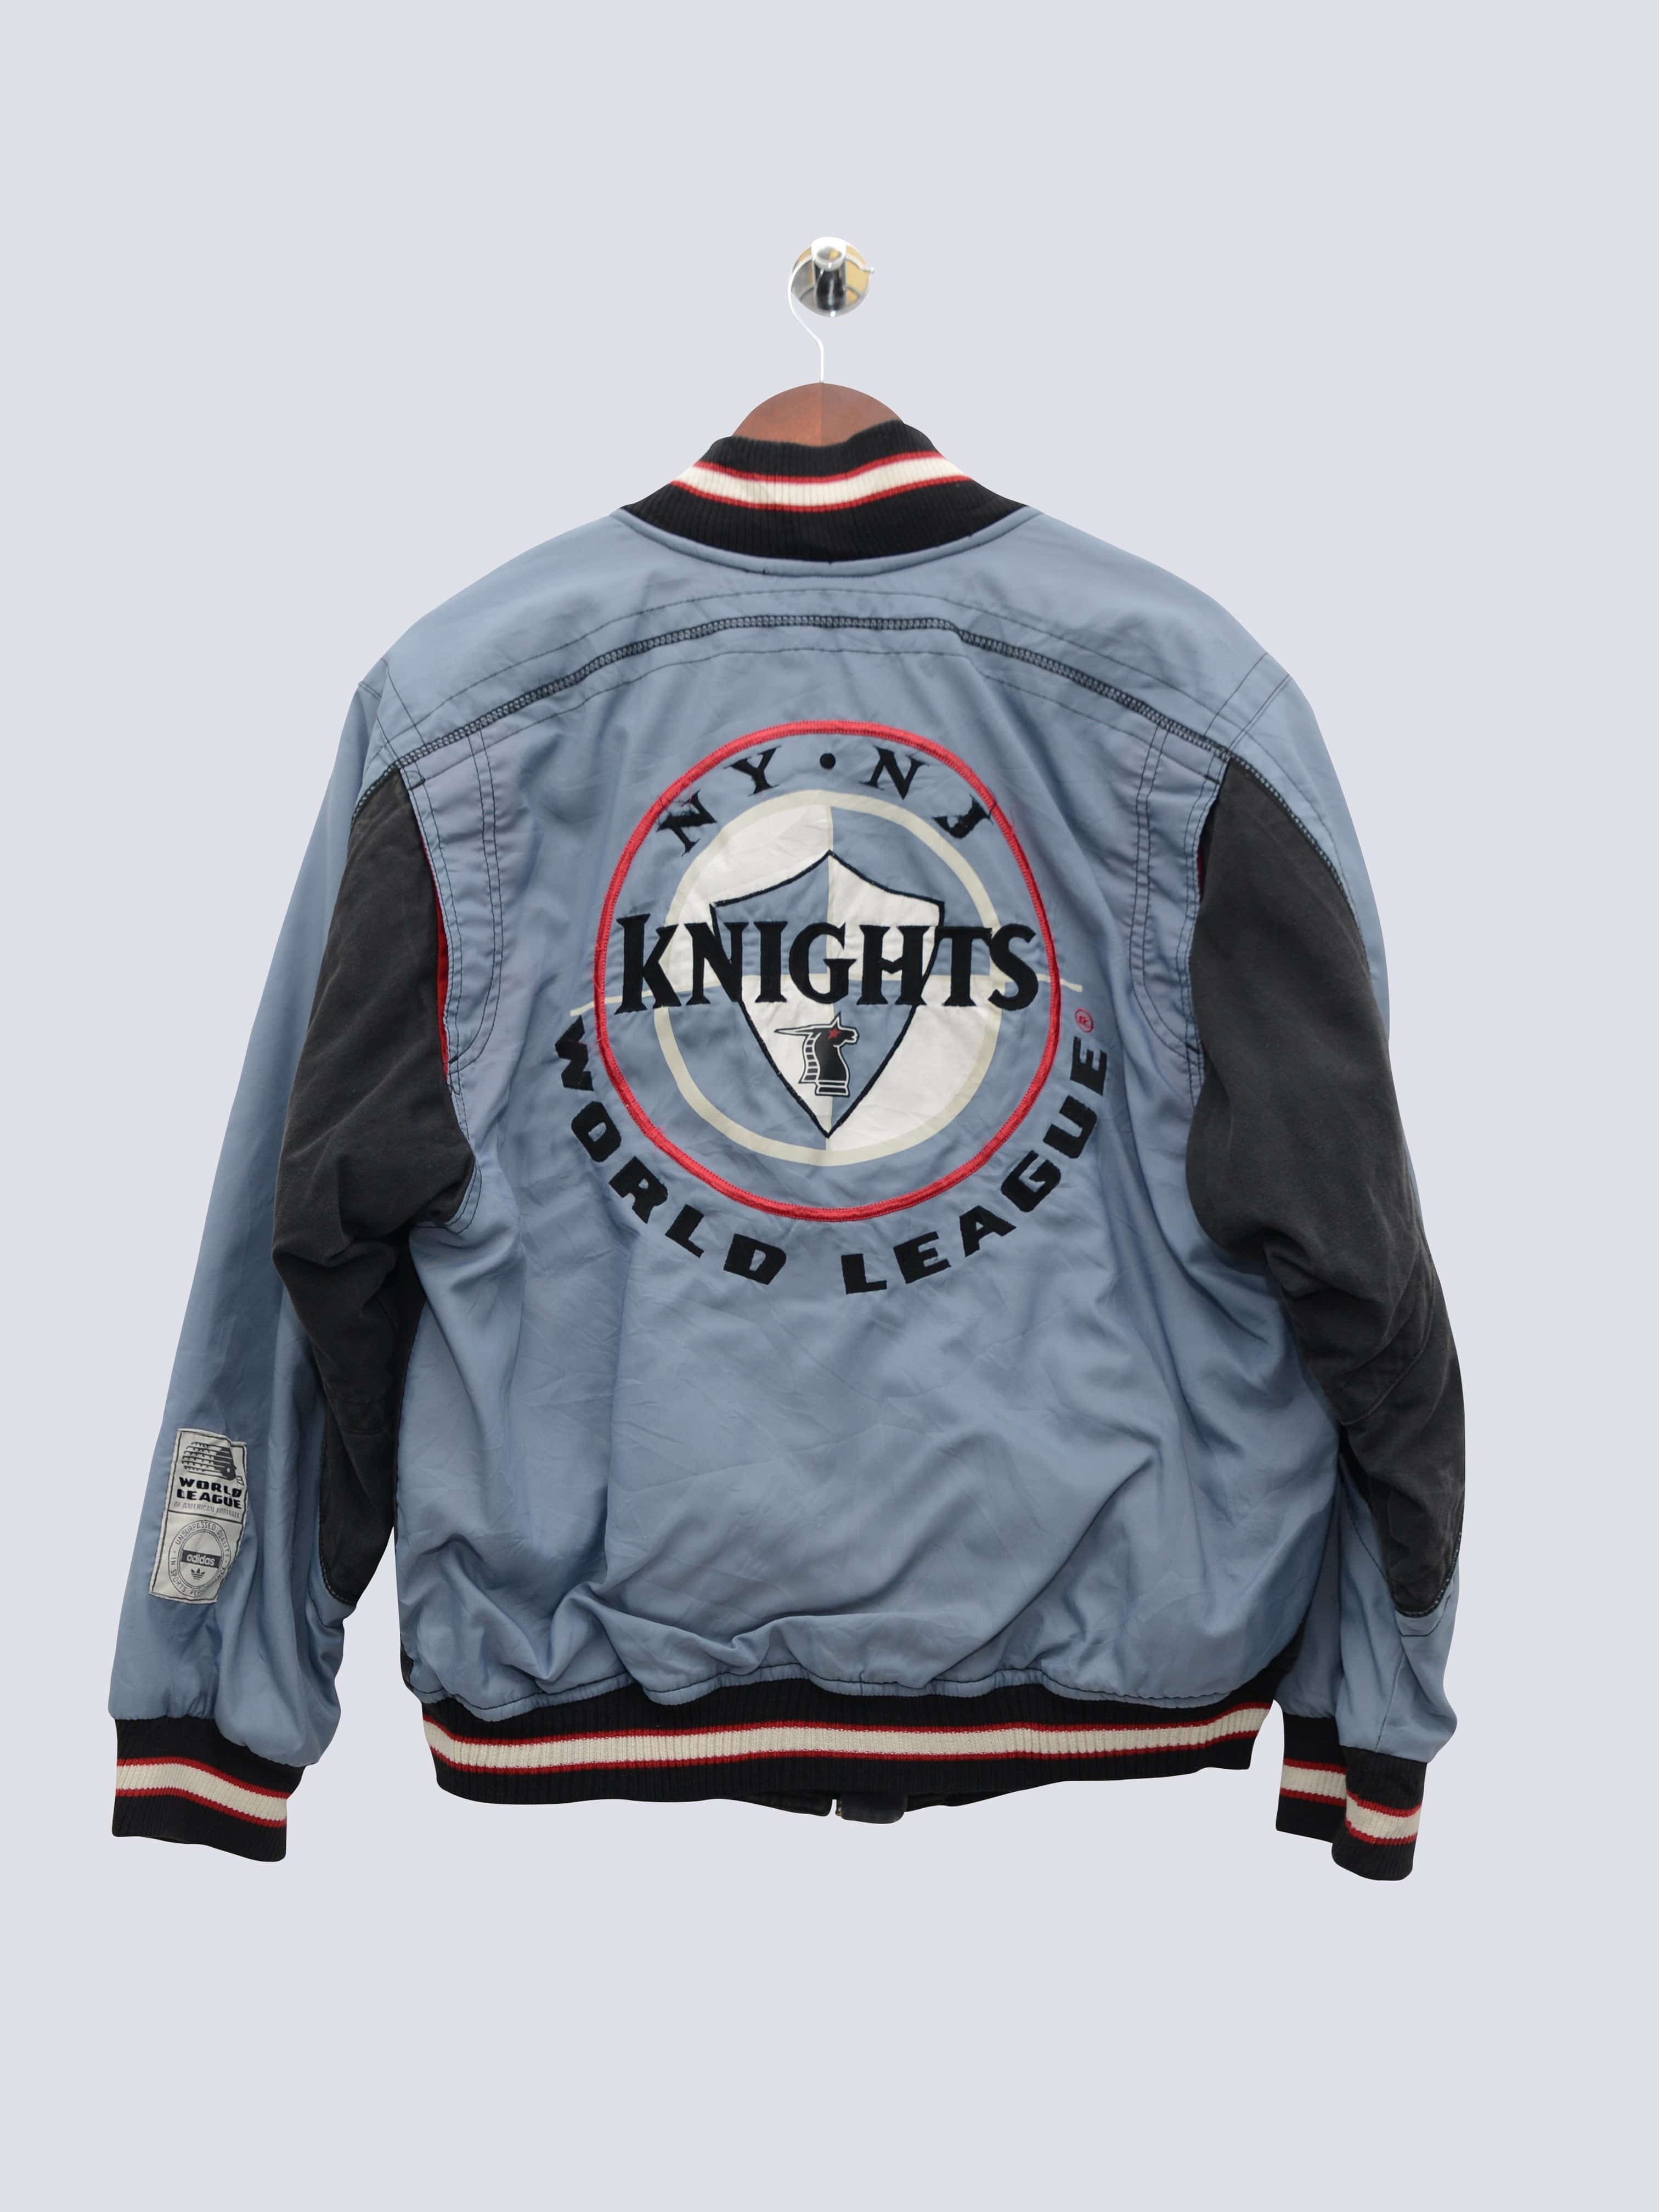 Adidas New York Knight Jacket Black // Small - RHAGHOUSE VINTAGE